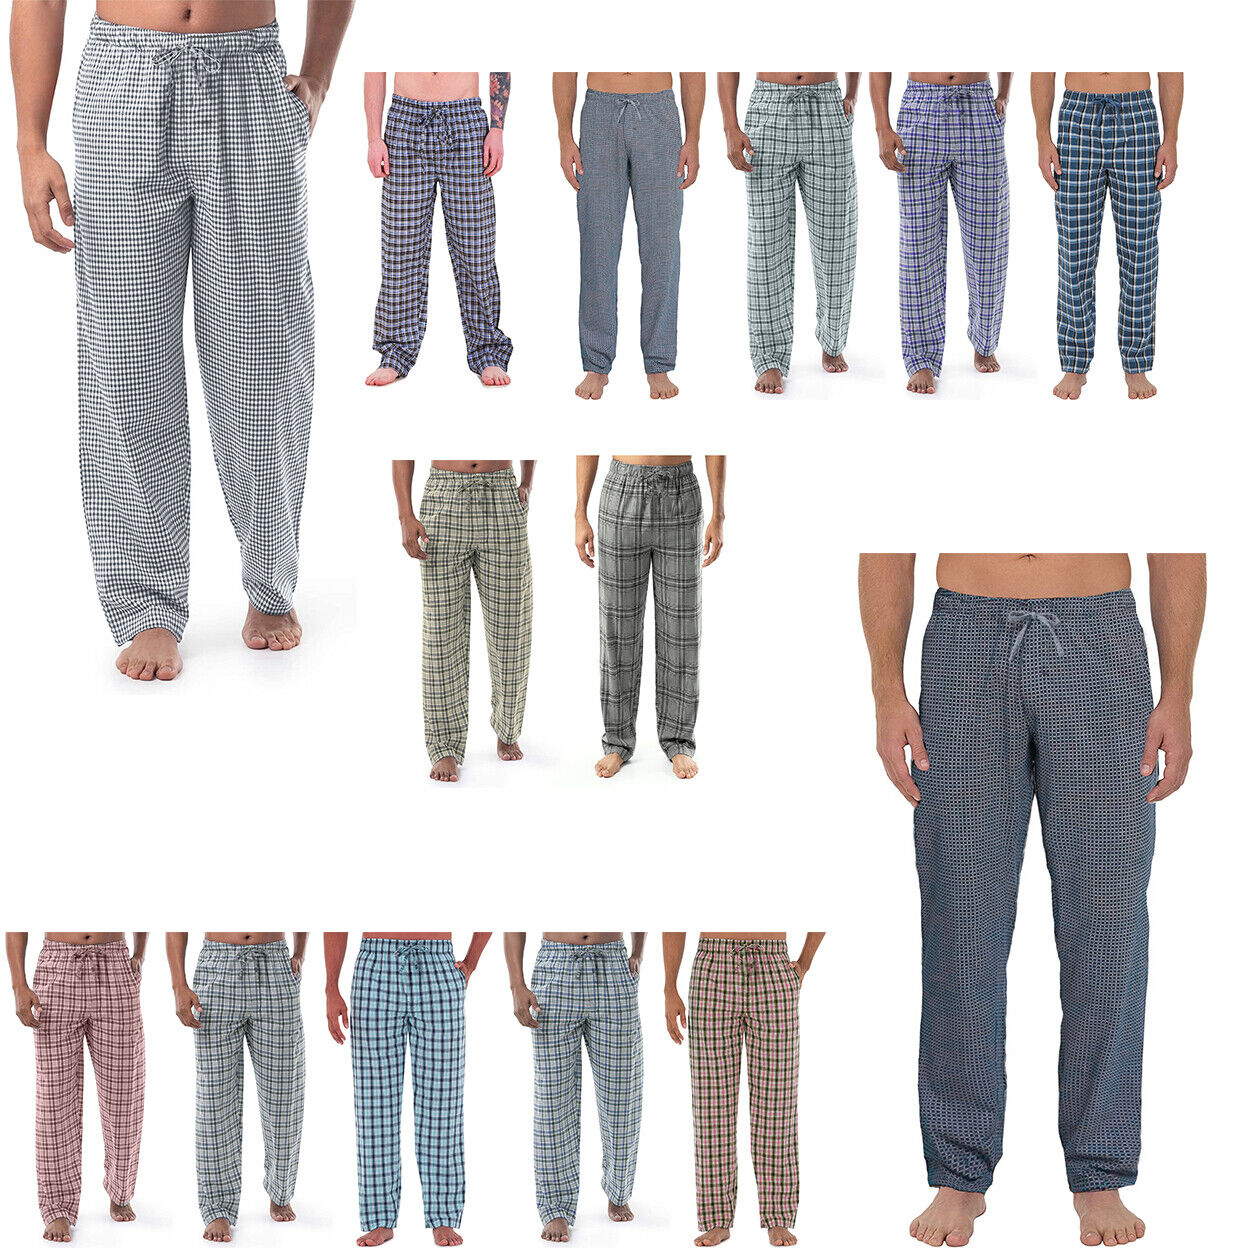 5-Pack: Men's Ultra-Soft Plaid Cotton Jersey Knit Comfy Sleep Lounge Pajama Pants - Medium